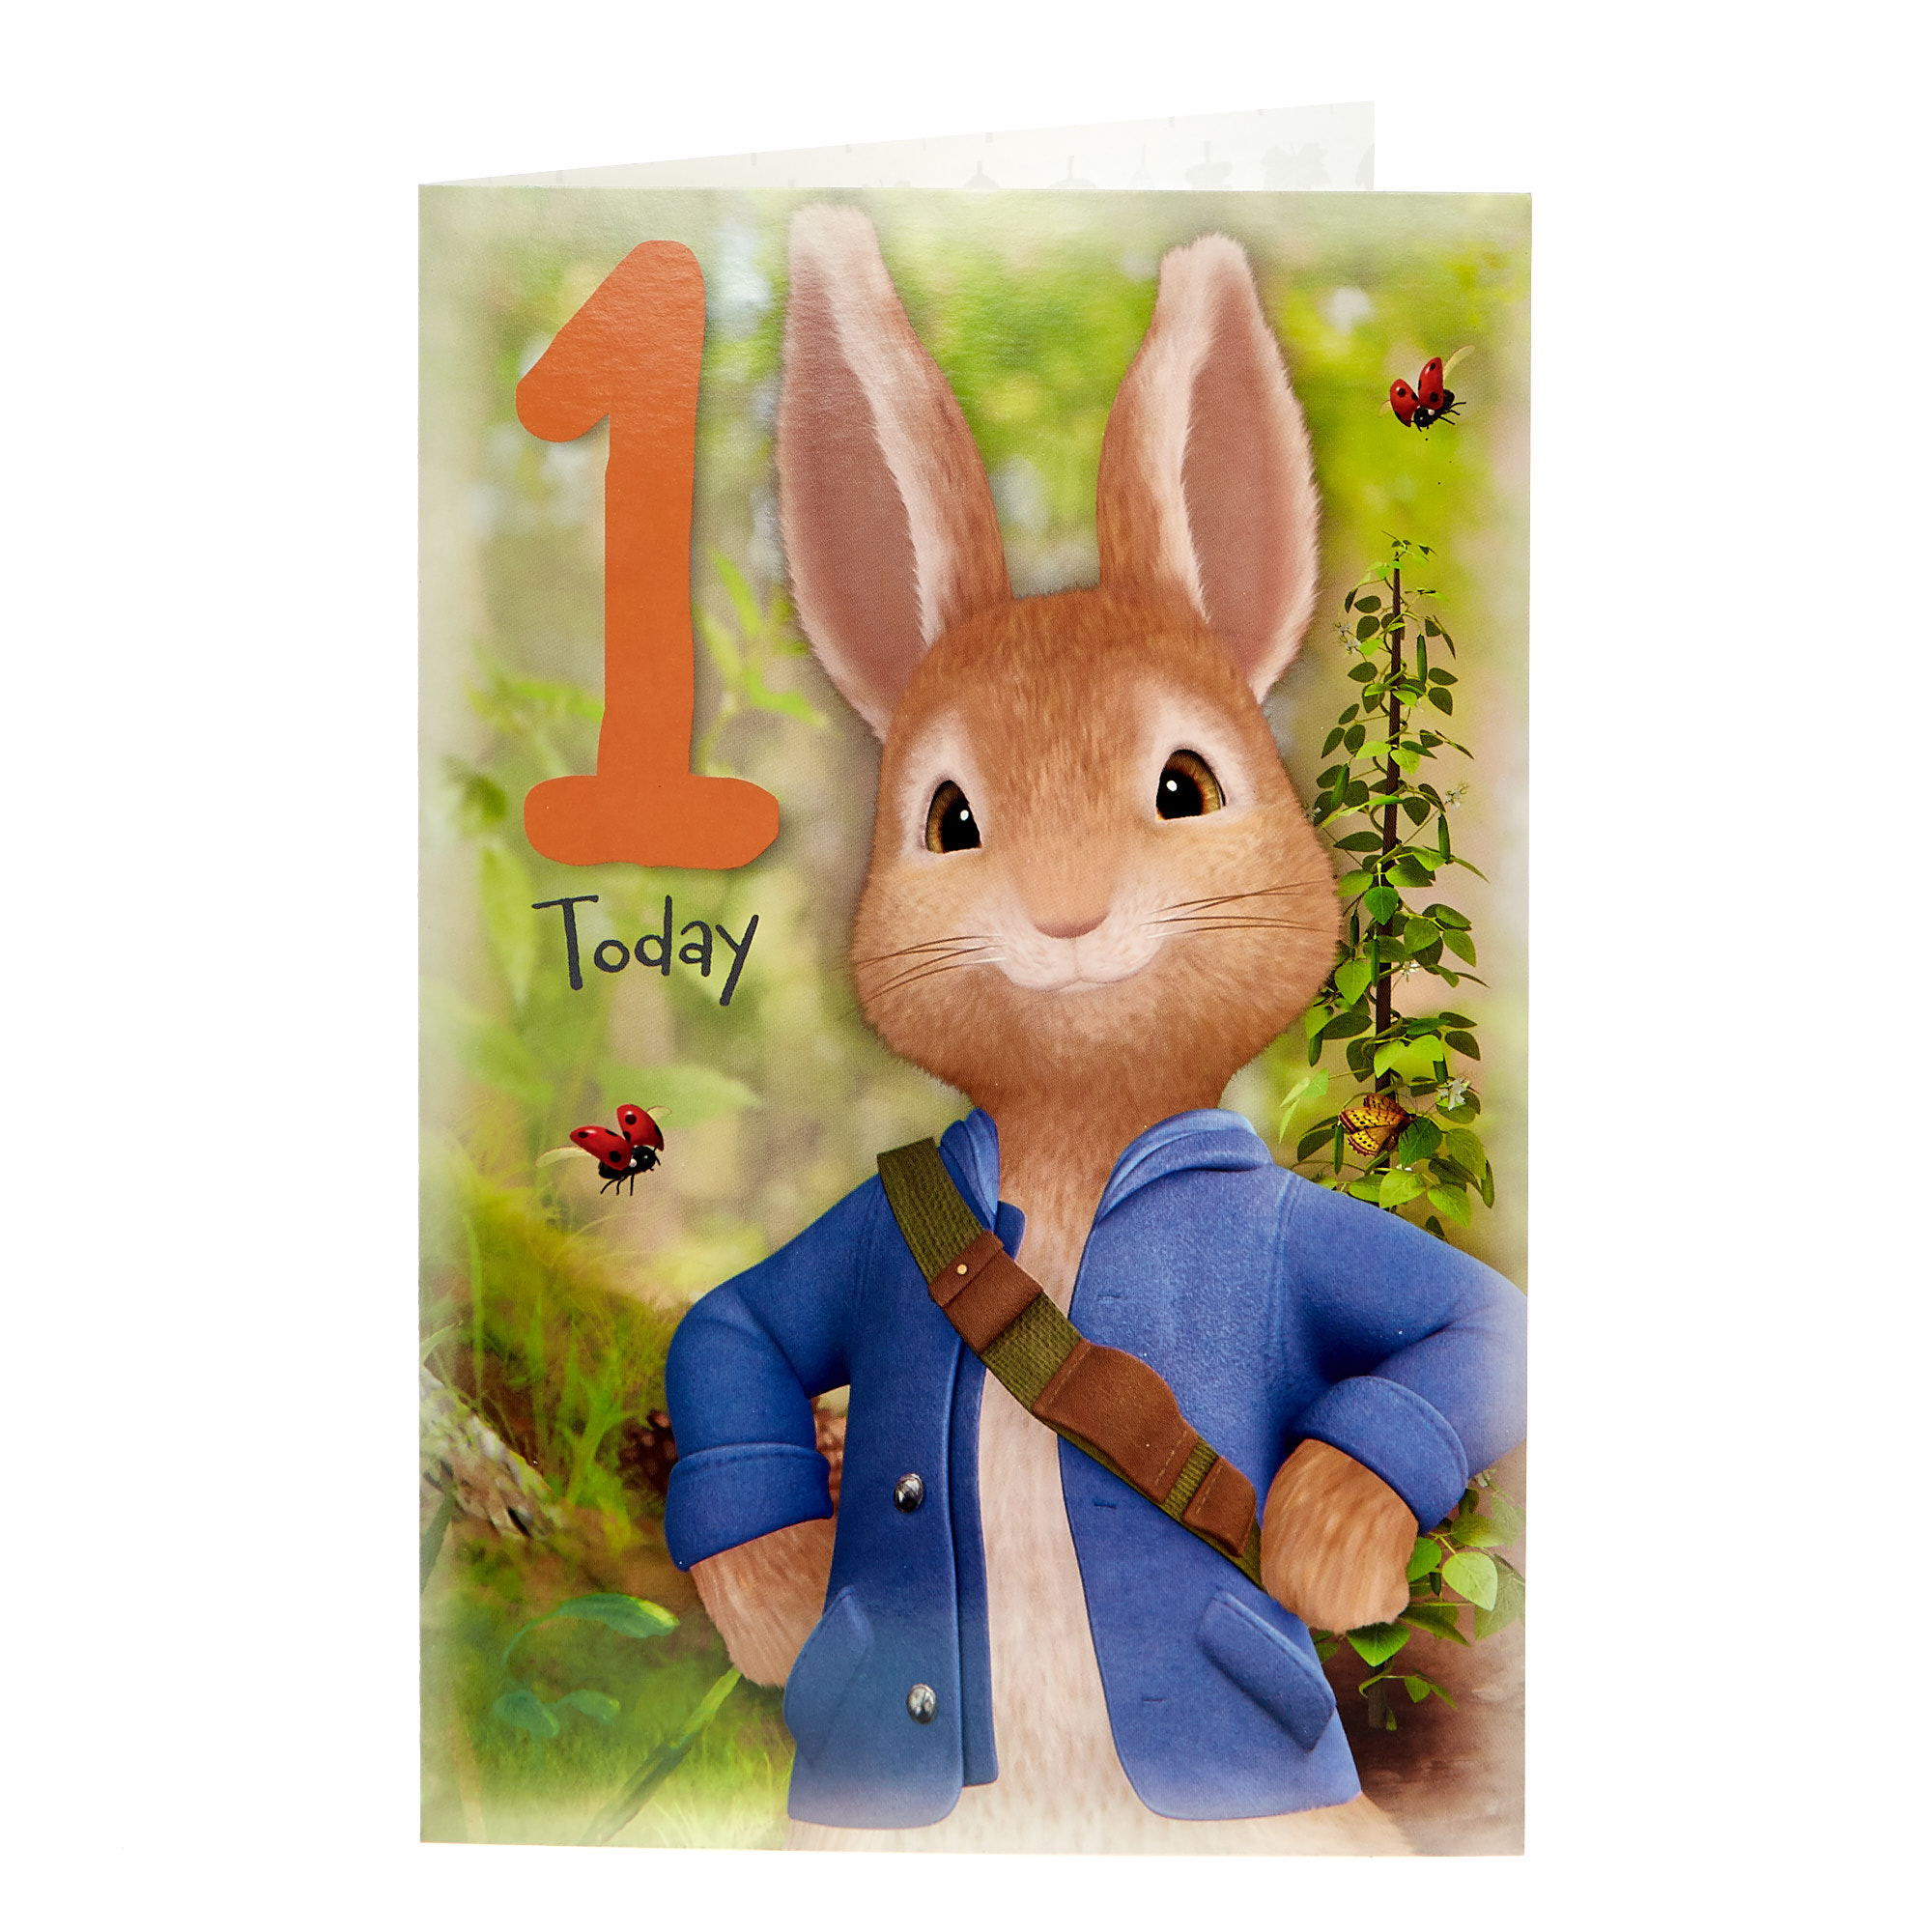 Peter Rabbit 1st Birthday Card